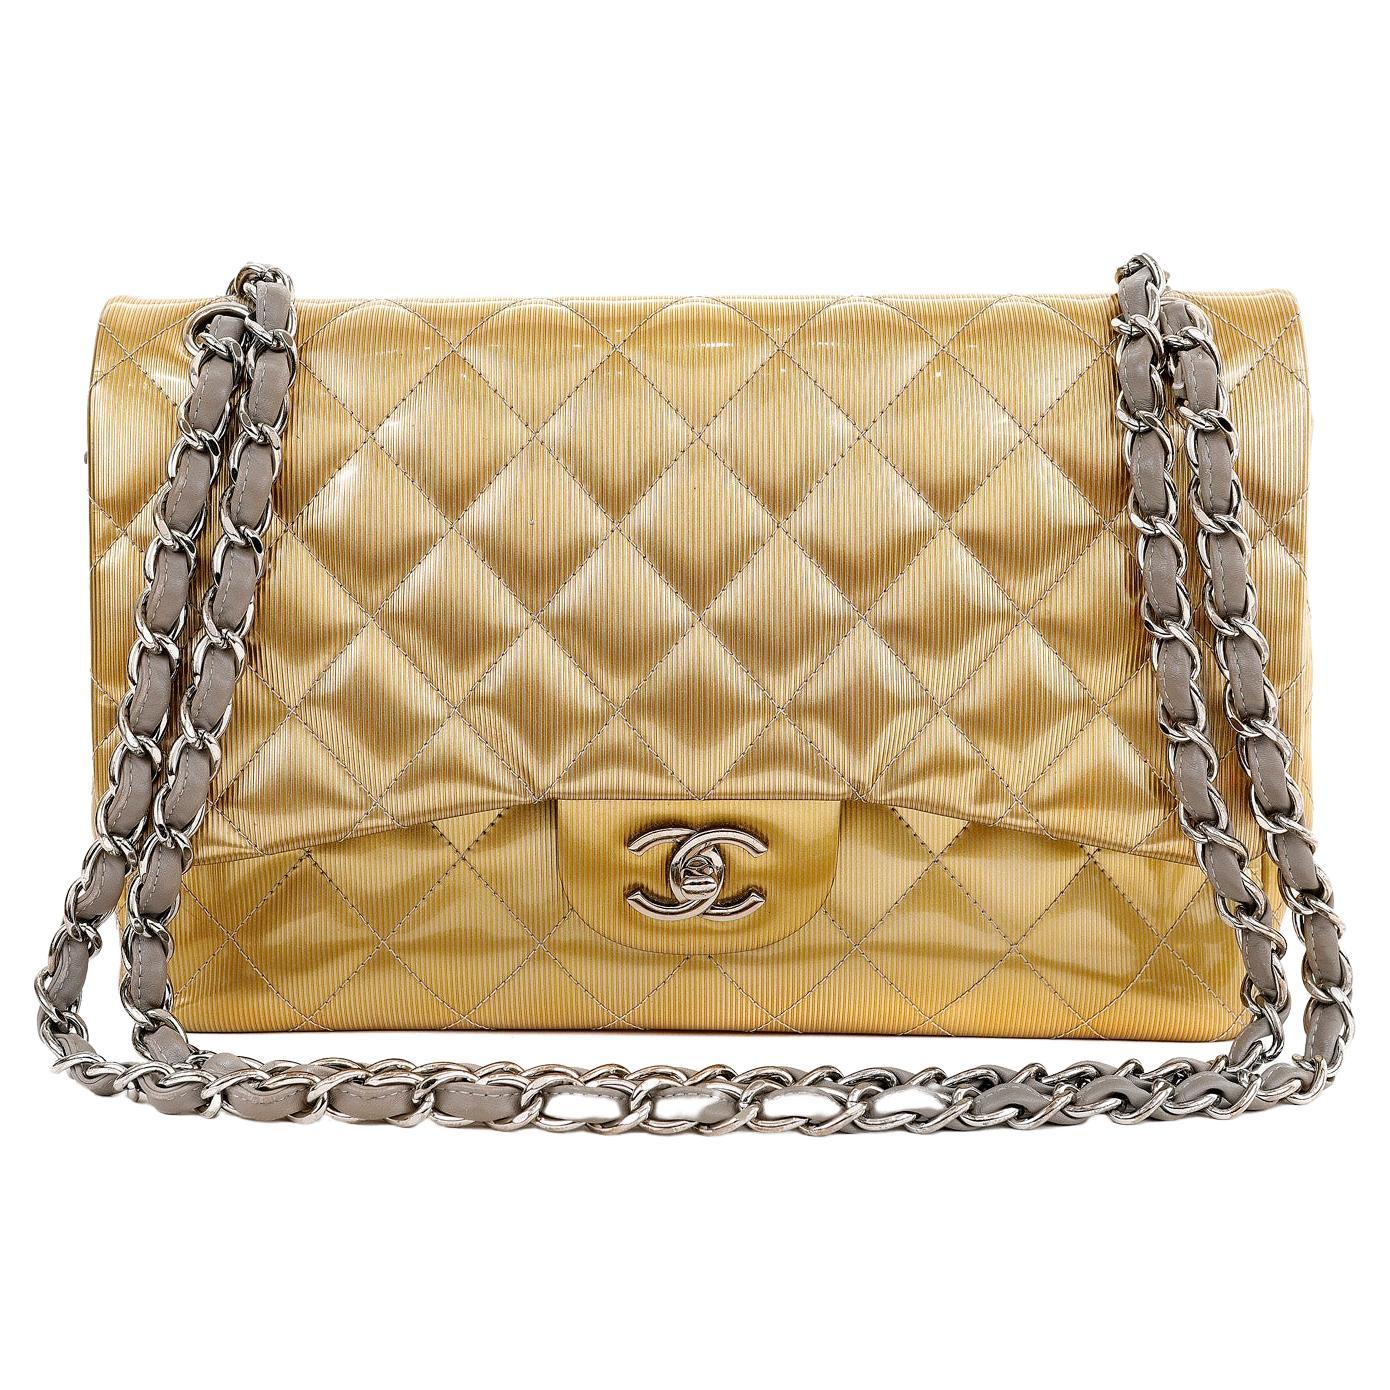 Chanel Goldfarbene Jumbo Classic Klappentasche aus Lackleder